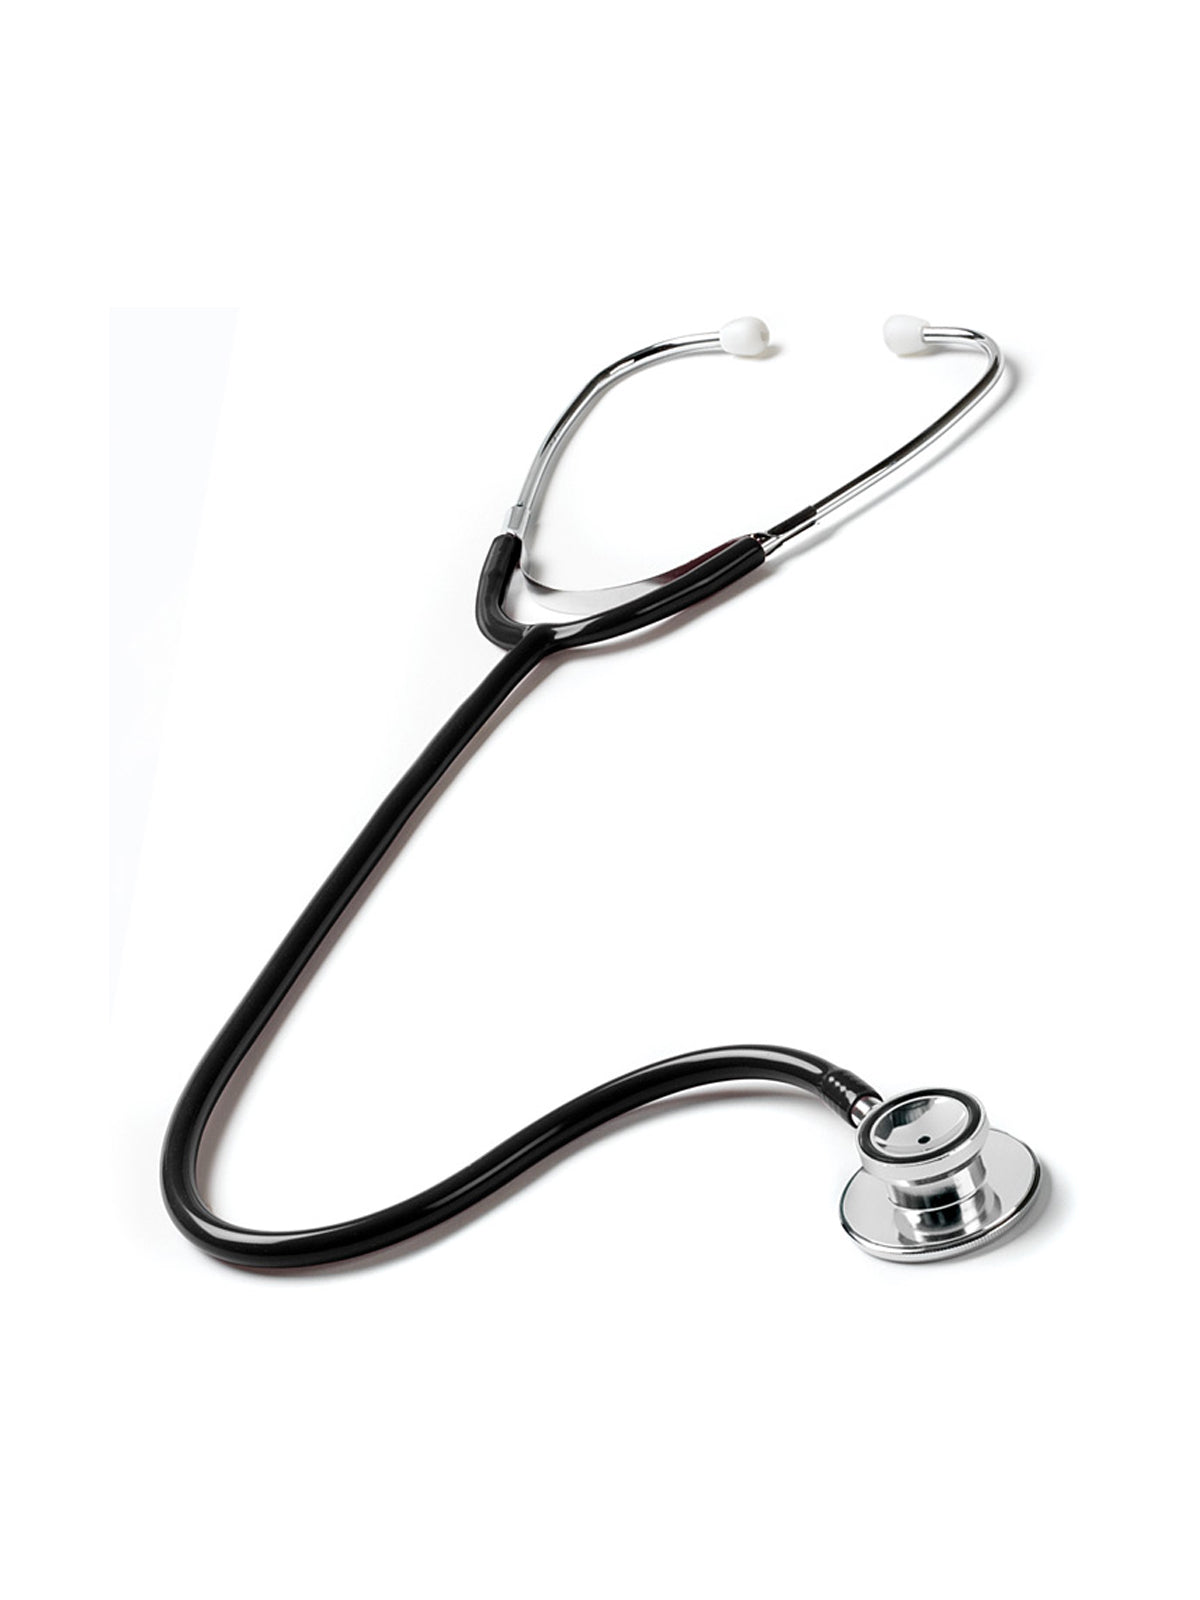 Dual Head Stethoscope (Clamshell) - S108 - Black